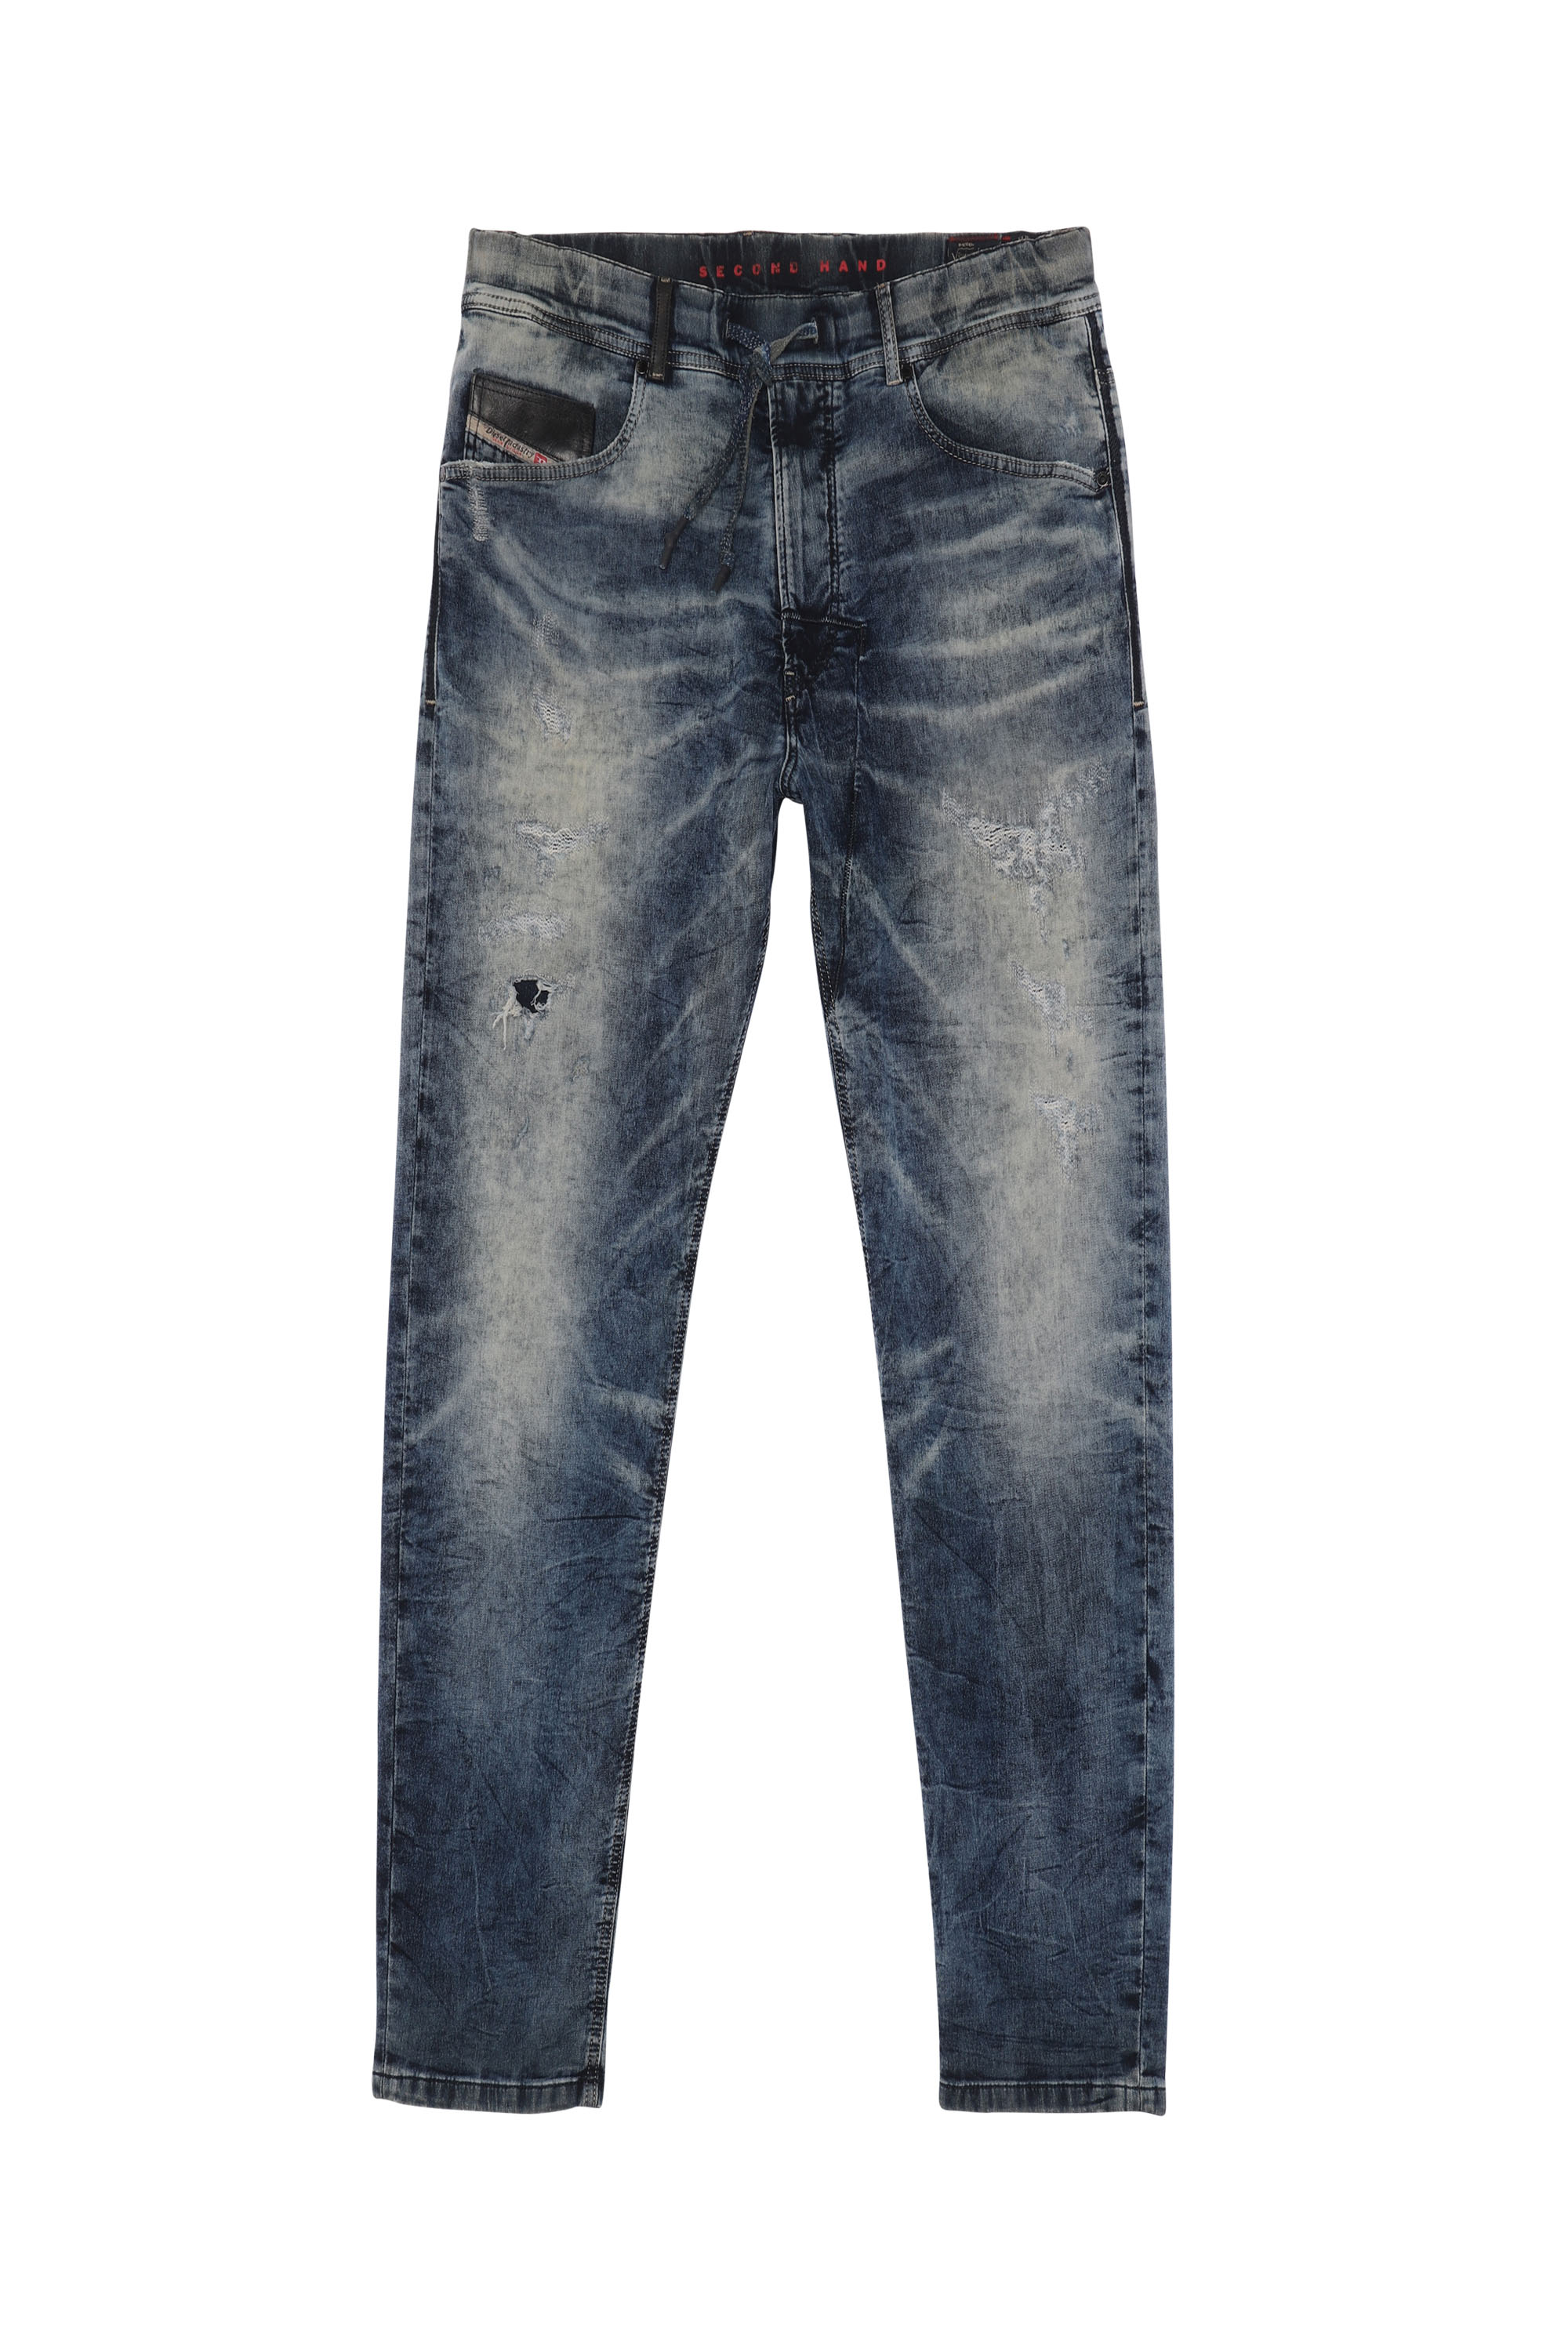 NARROT JoggJeans®, Dark Blue - Jeans